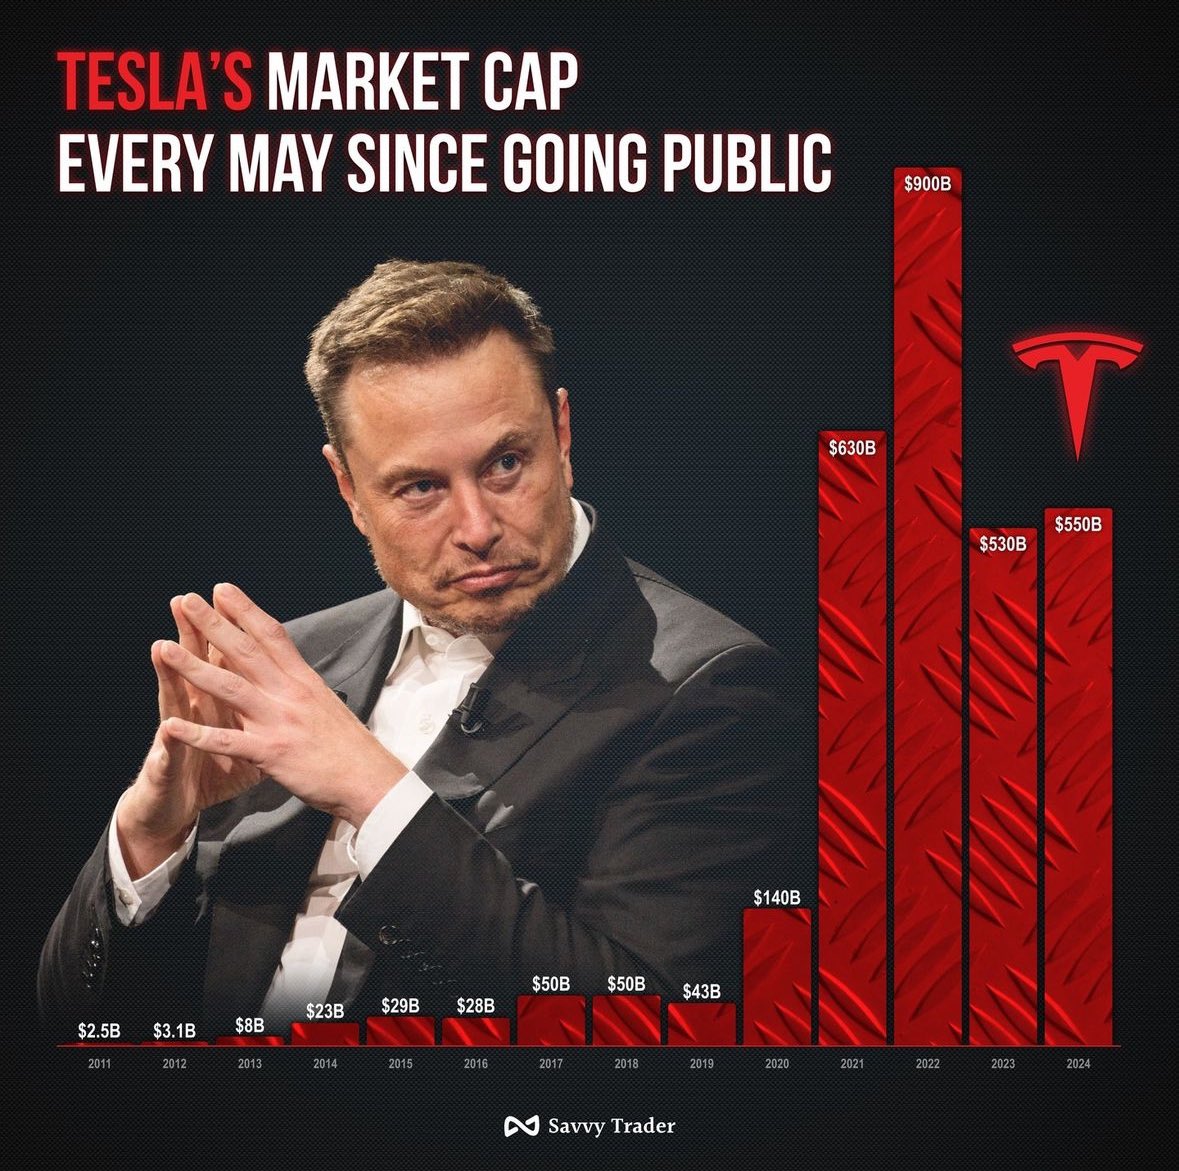 Tesla’s $TSLA market cap every May since going public